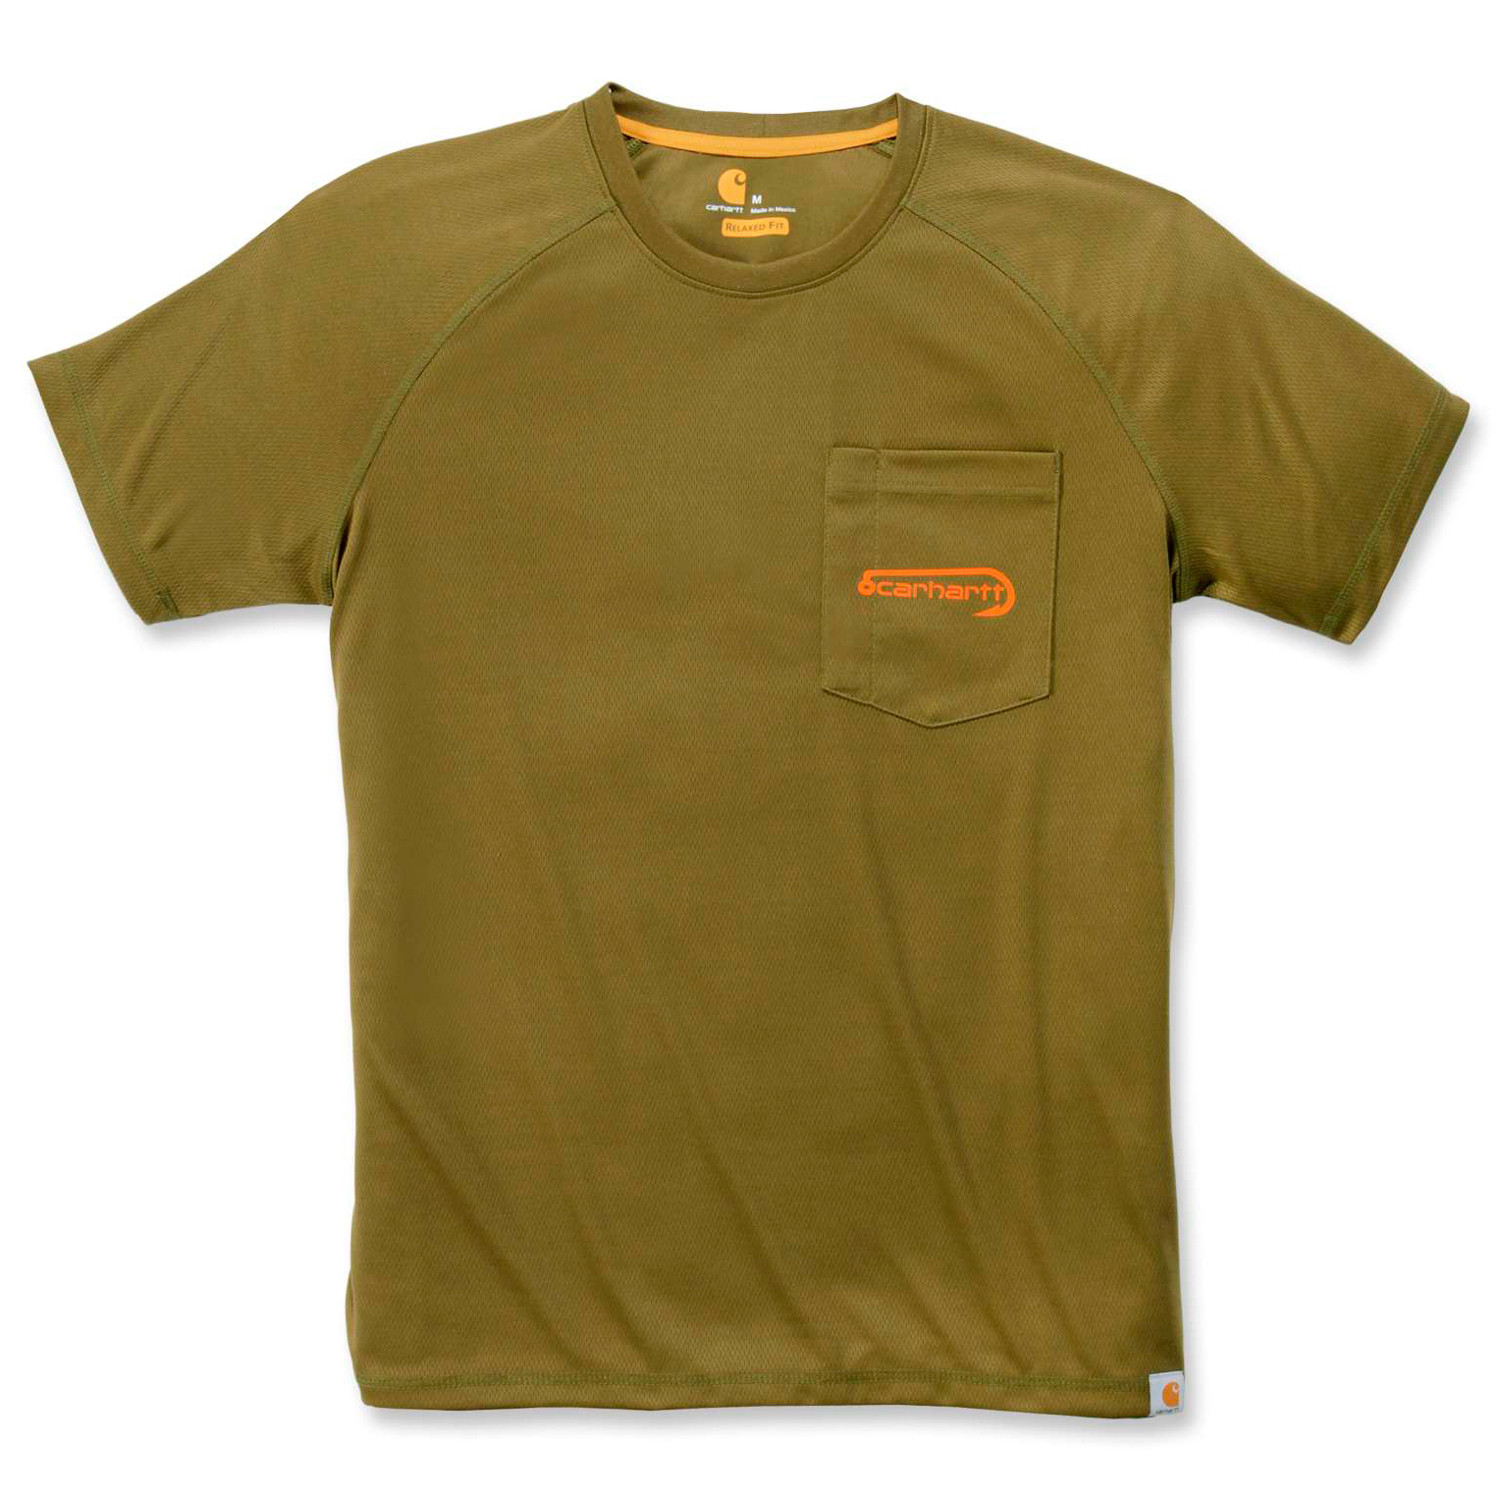 Футболка Carhartt Fishing T-Shirt S/S - 103570 (Military Olive, XS)